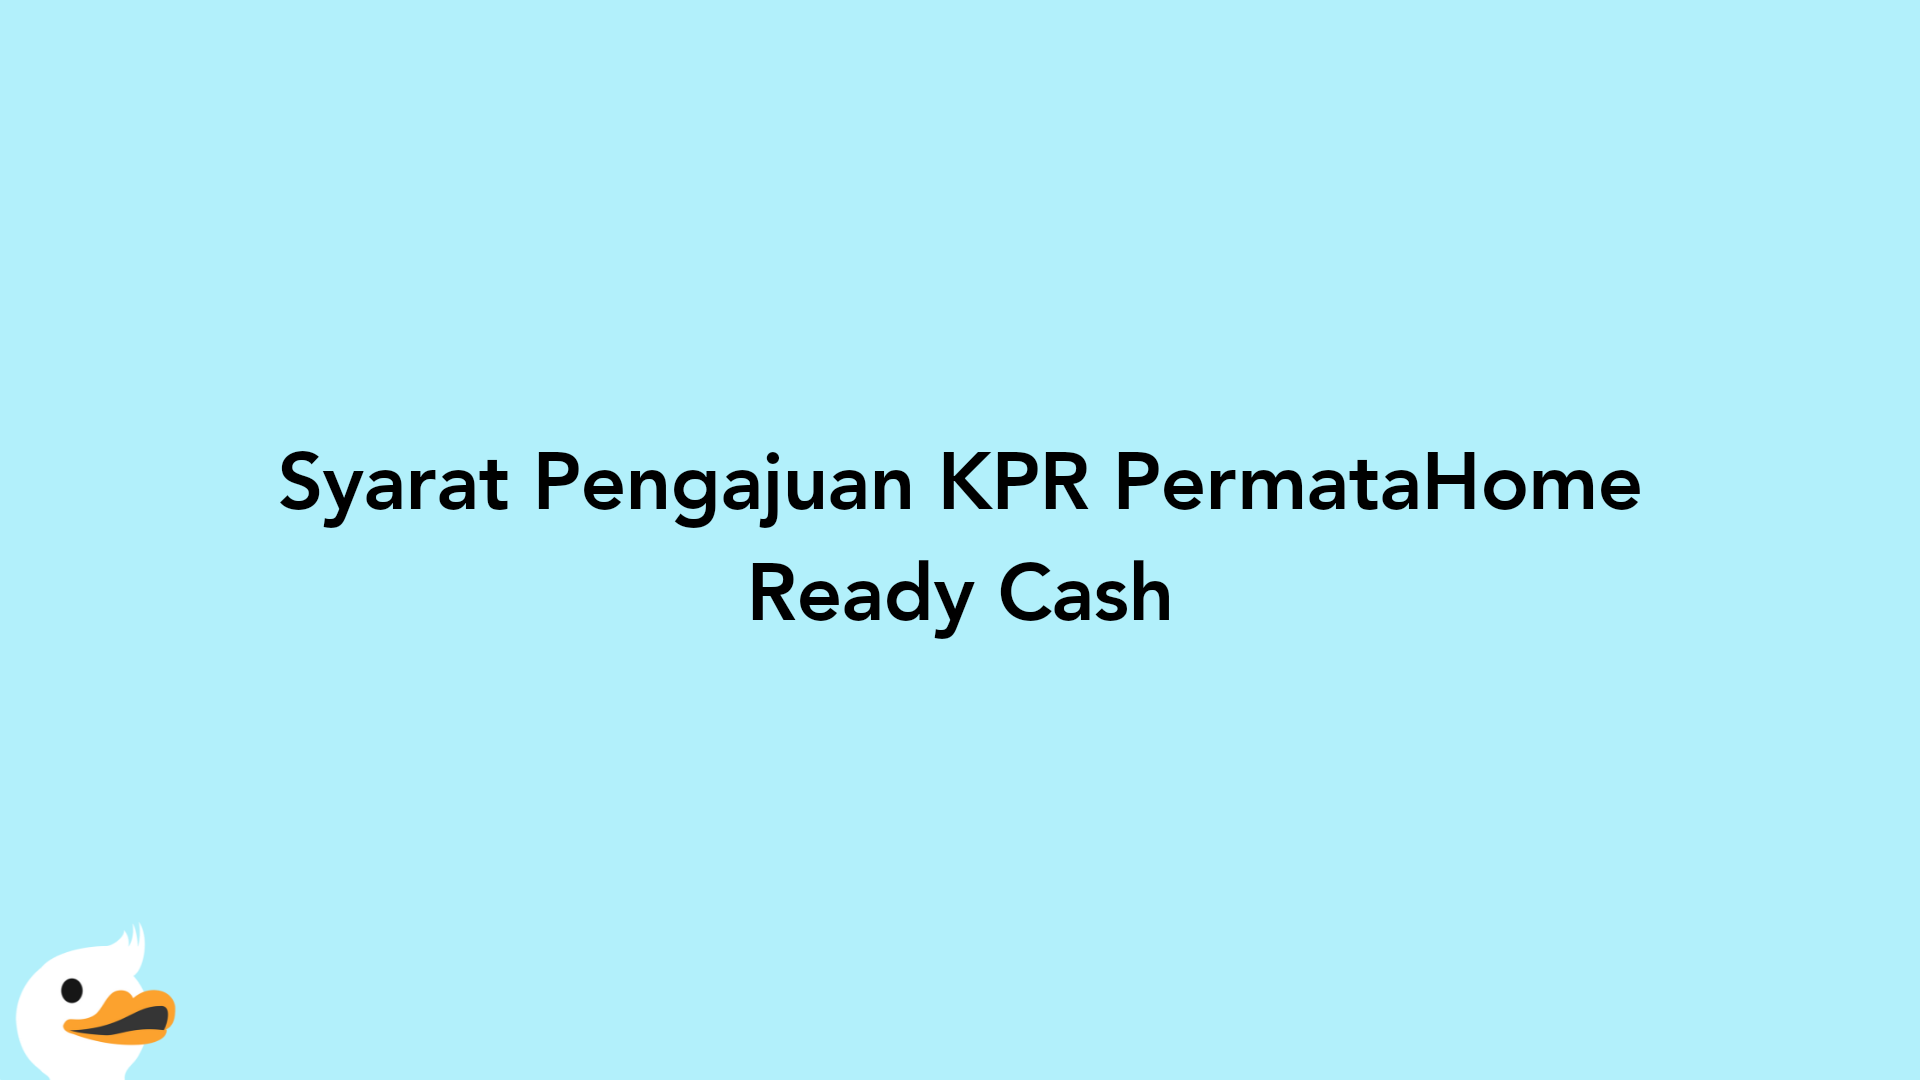 Syarat Pengajuan KPR PermataHome Ready Cash